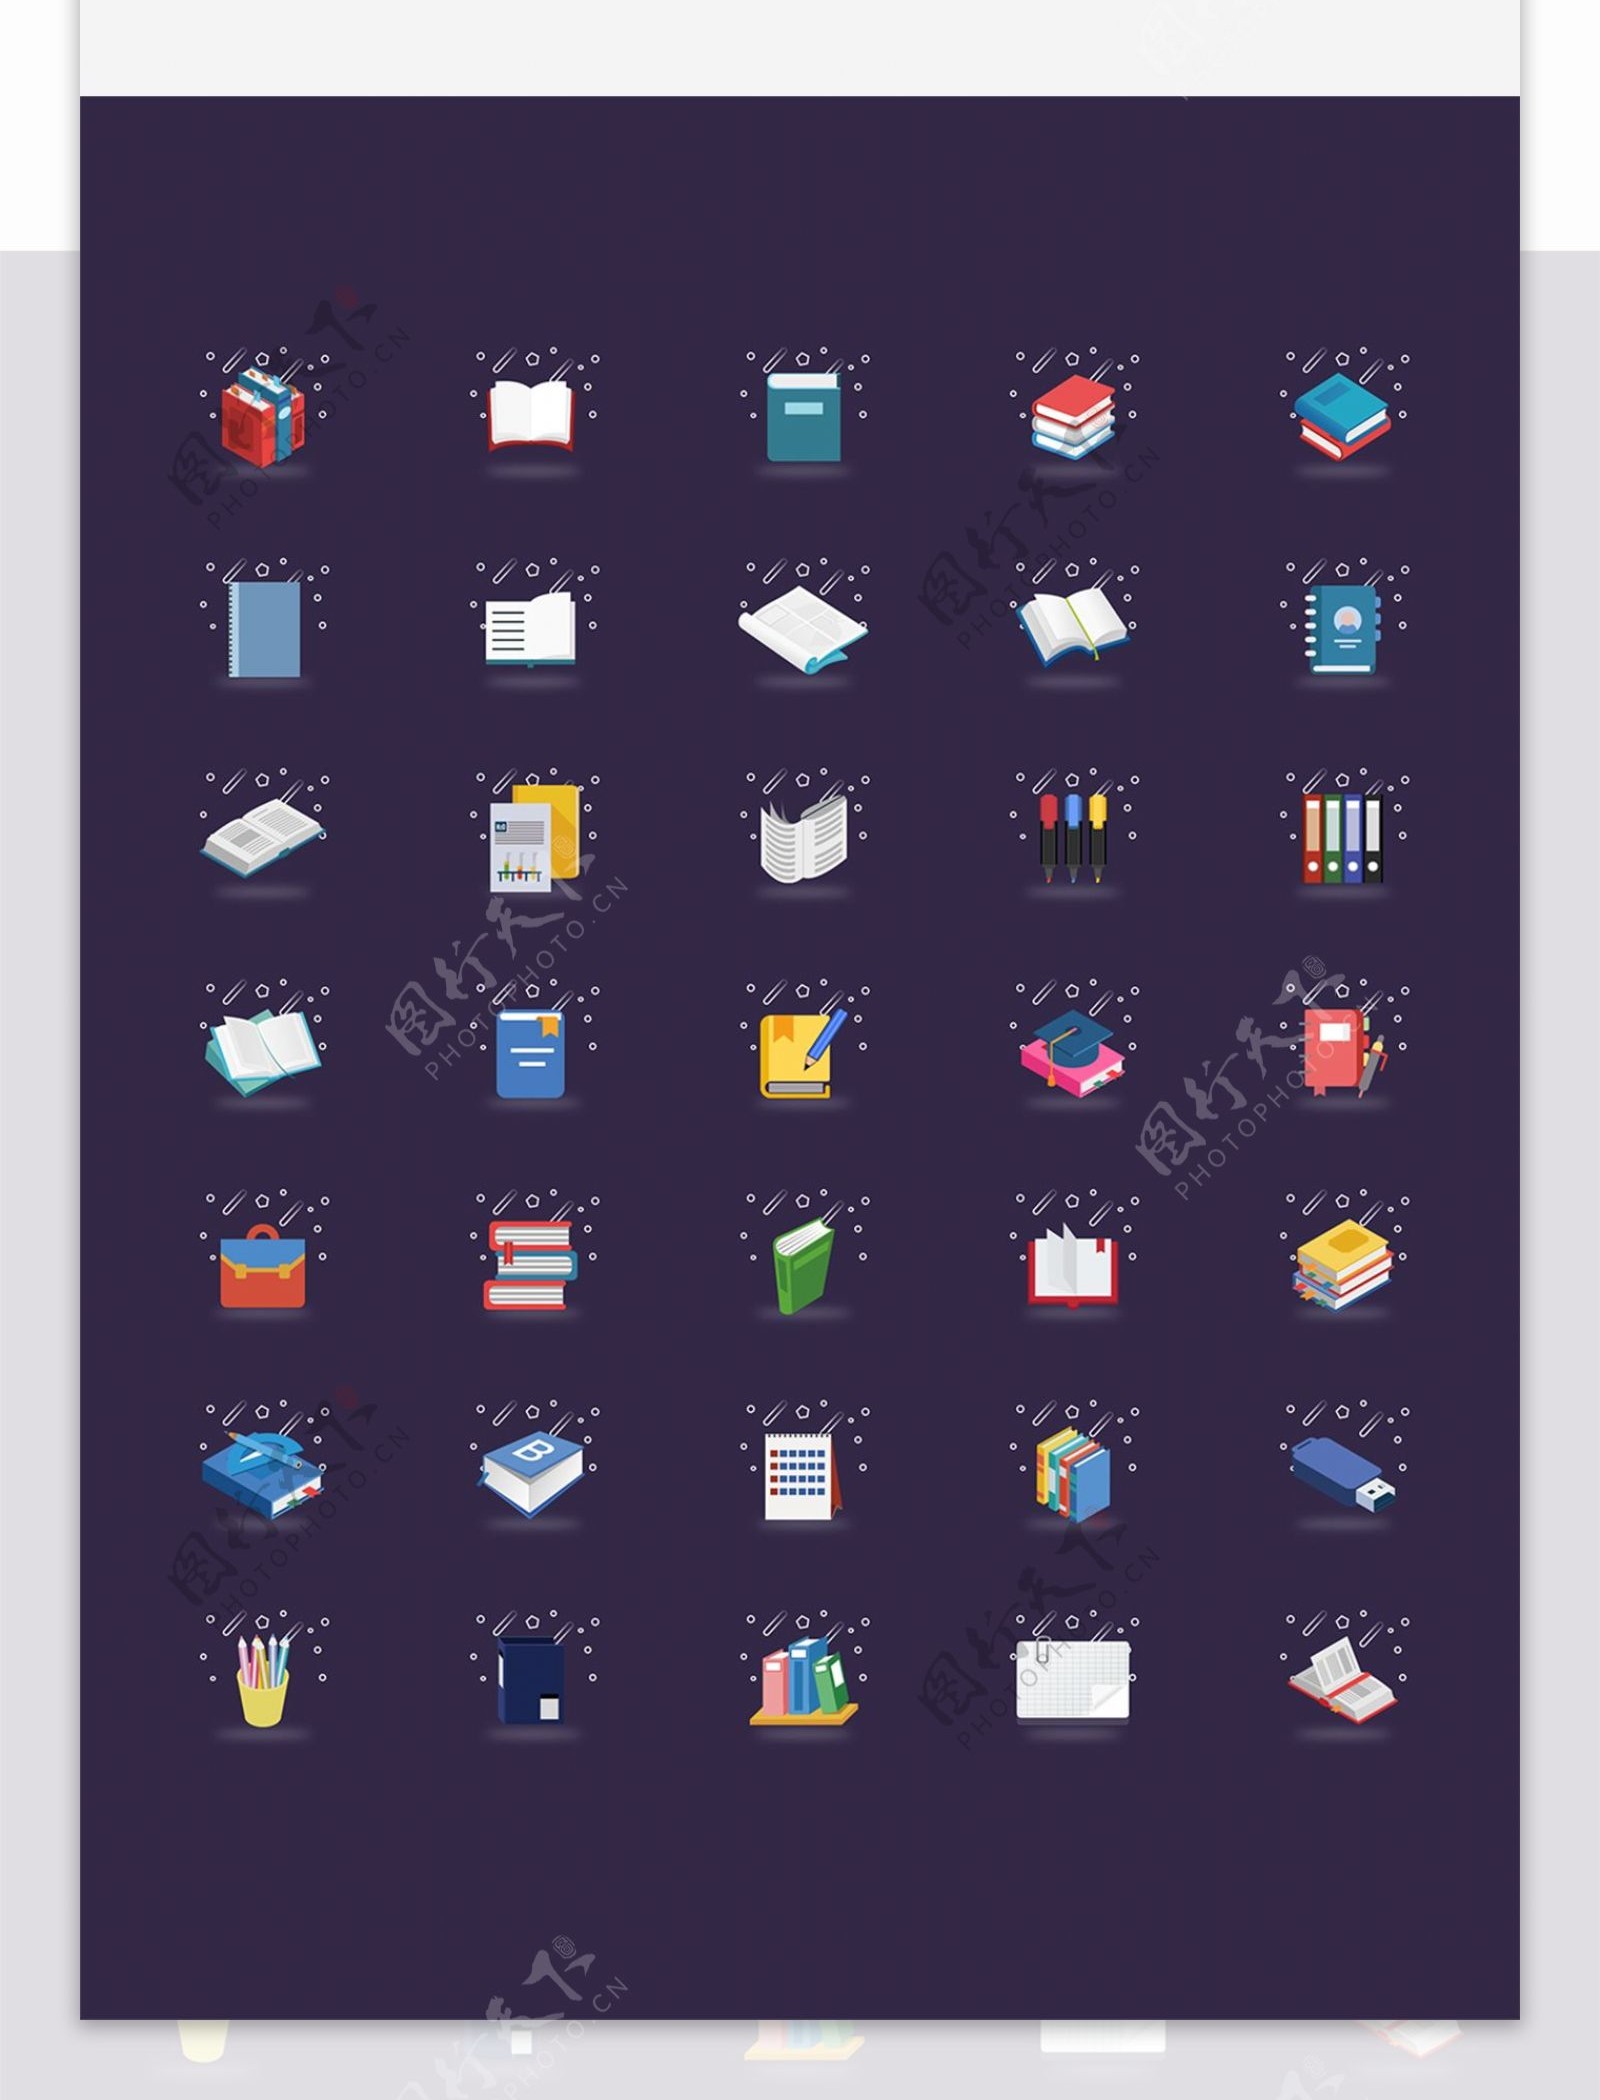 多款书籍图标icon设计